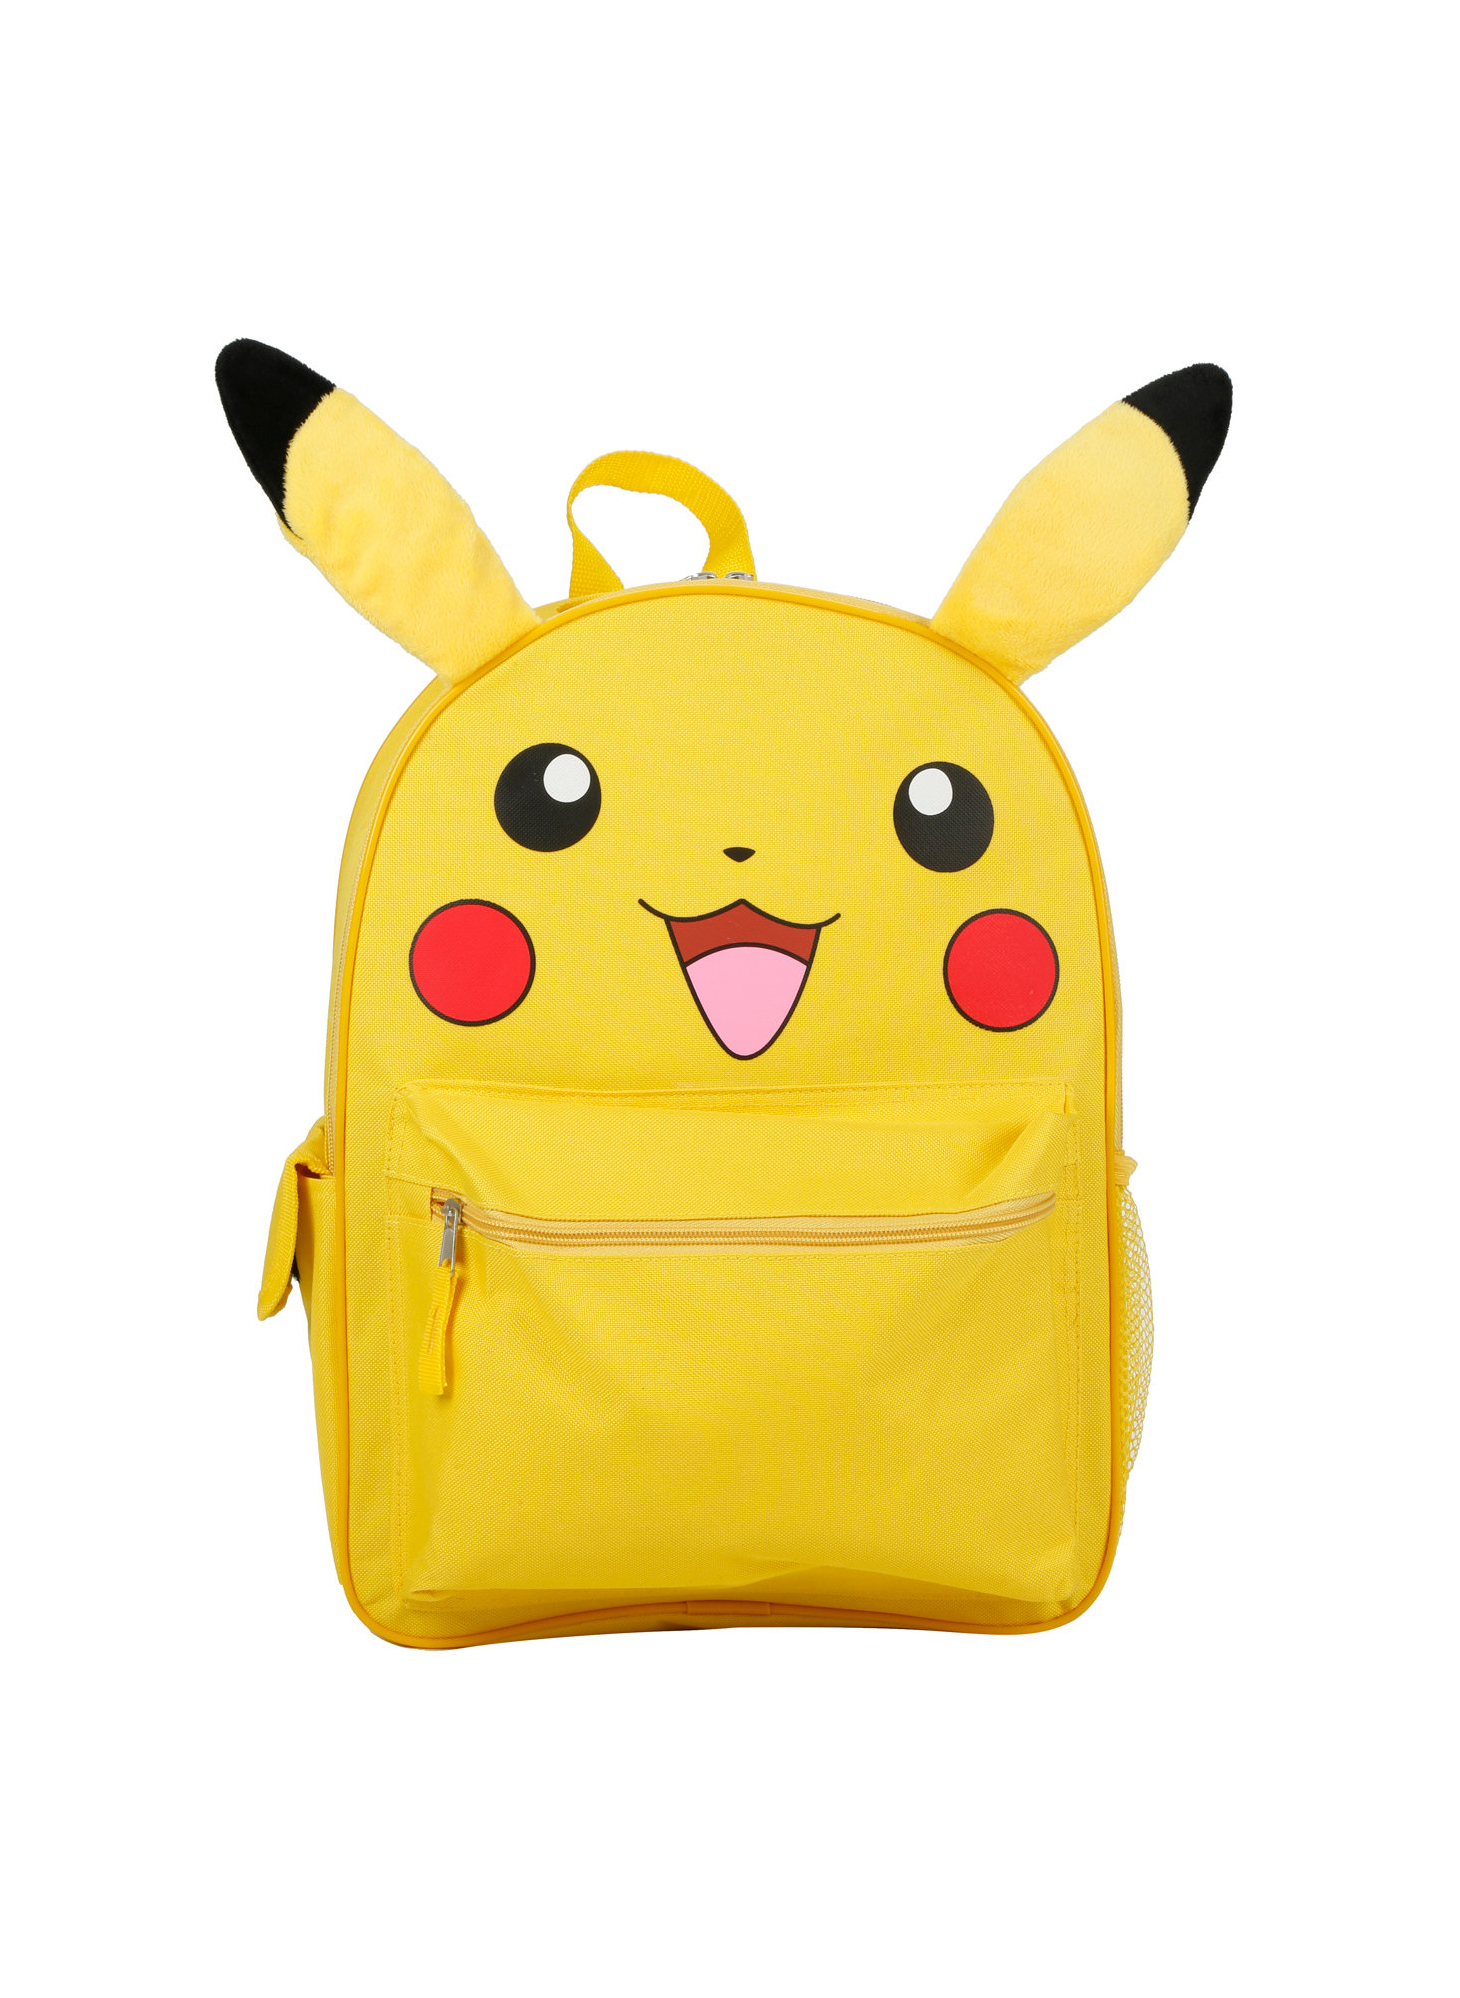 minstens Manie Voetzool Pikachu Pokémon rugtas klein kopen? €21,95 - FeestinjeBeest.nl